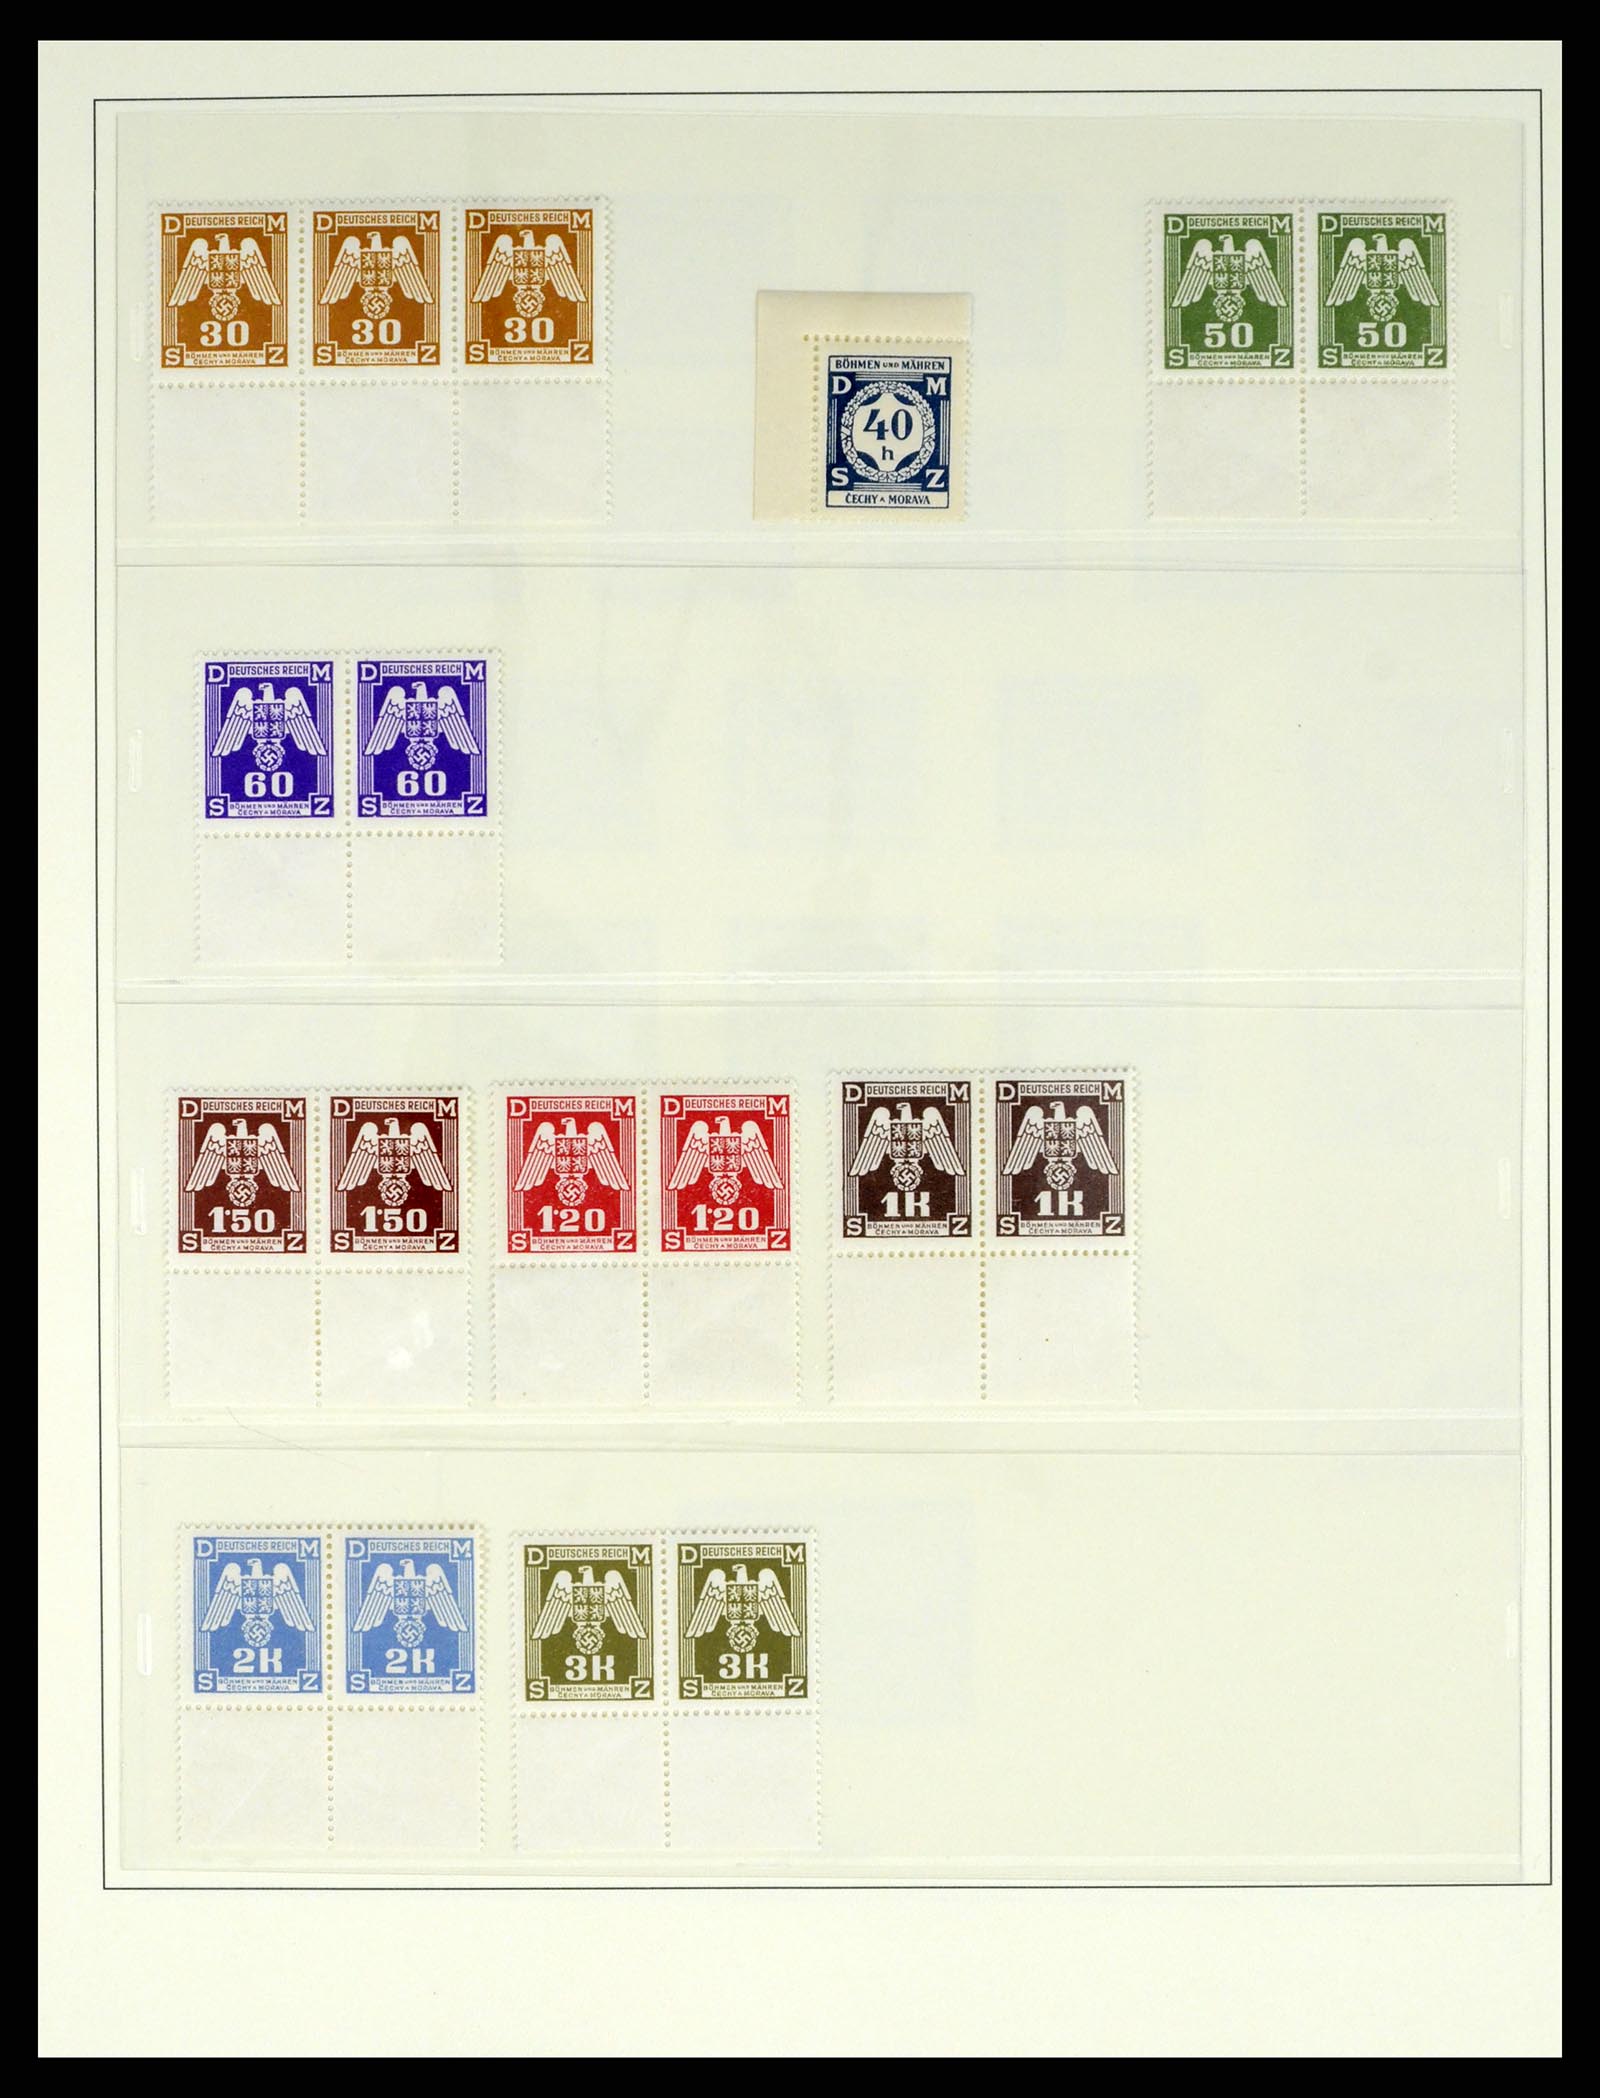 37535 036 - Stamp collection 37535 German occupation second worldwar 1939-1945.